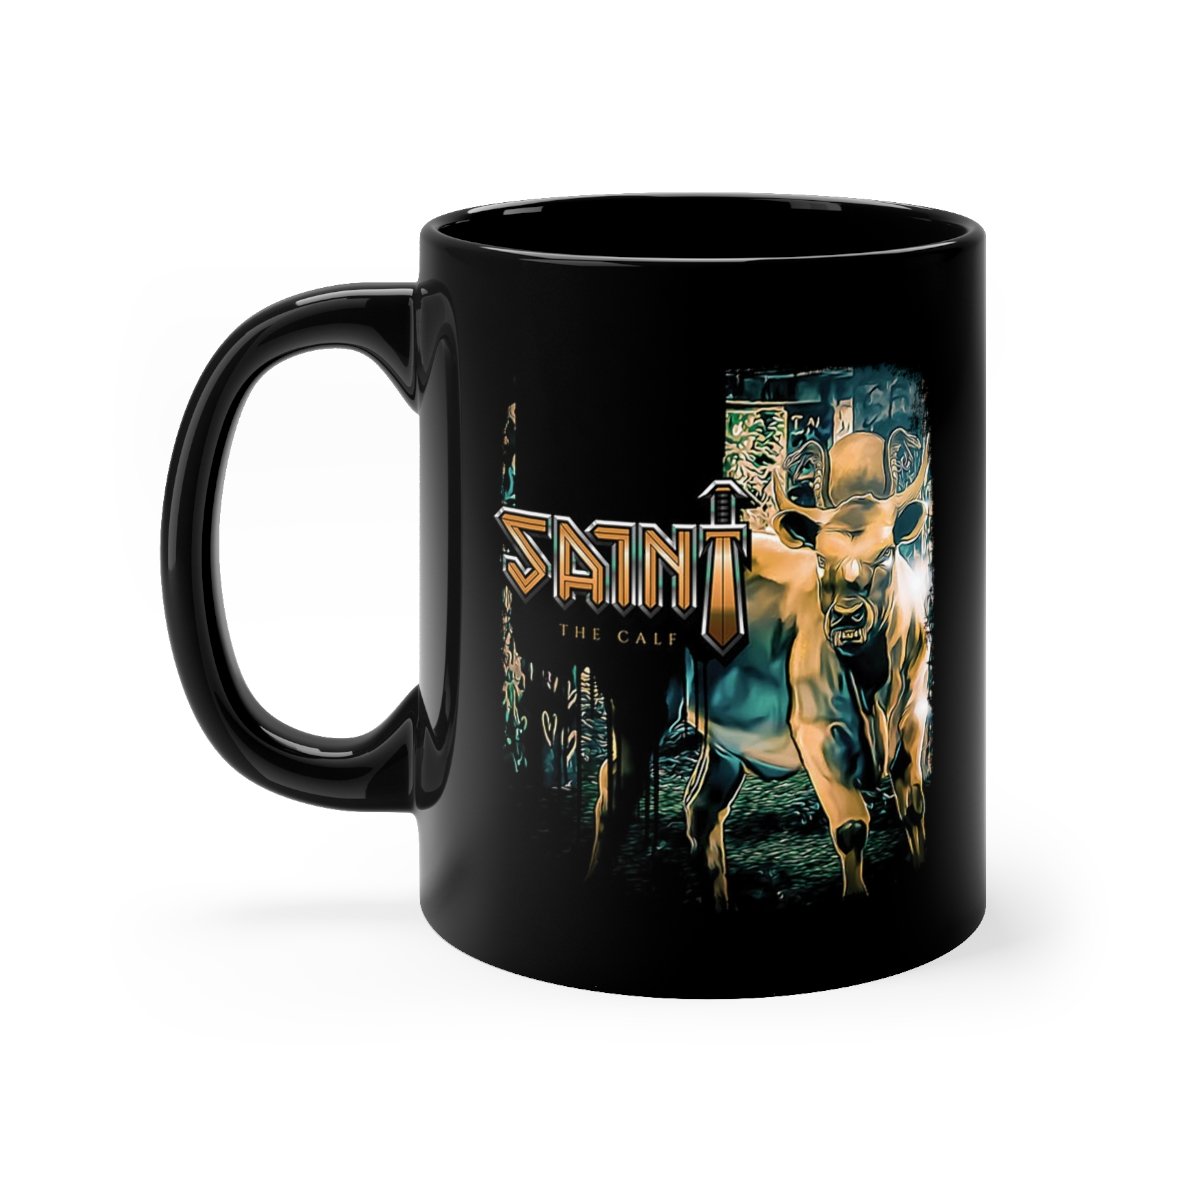 Saint – The Calf Black mug 11oz